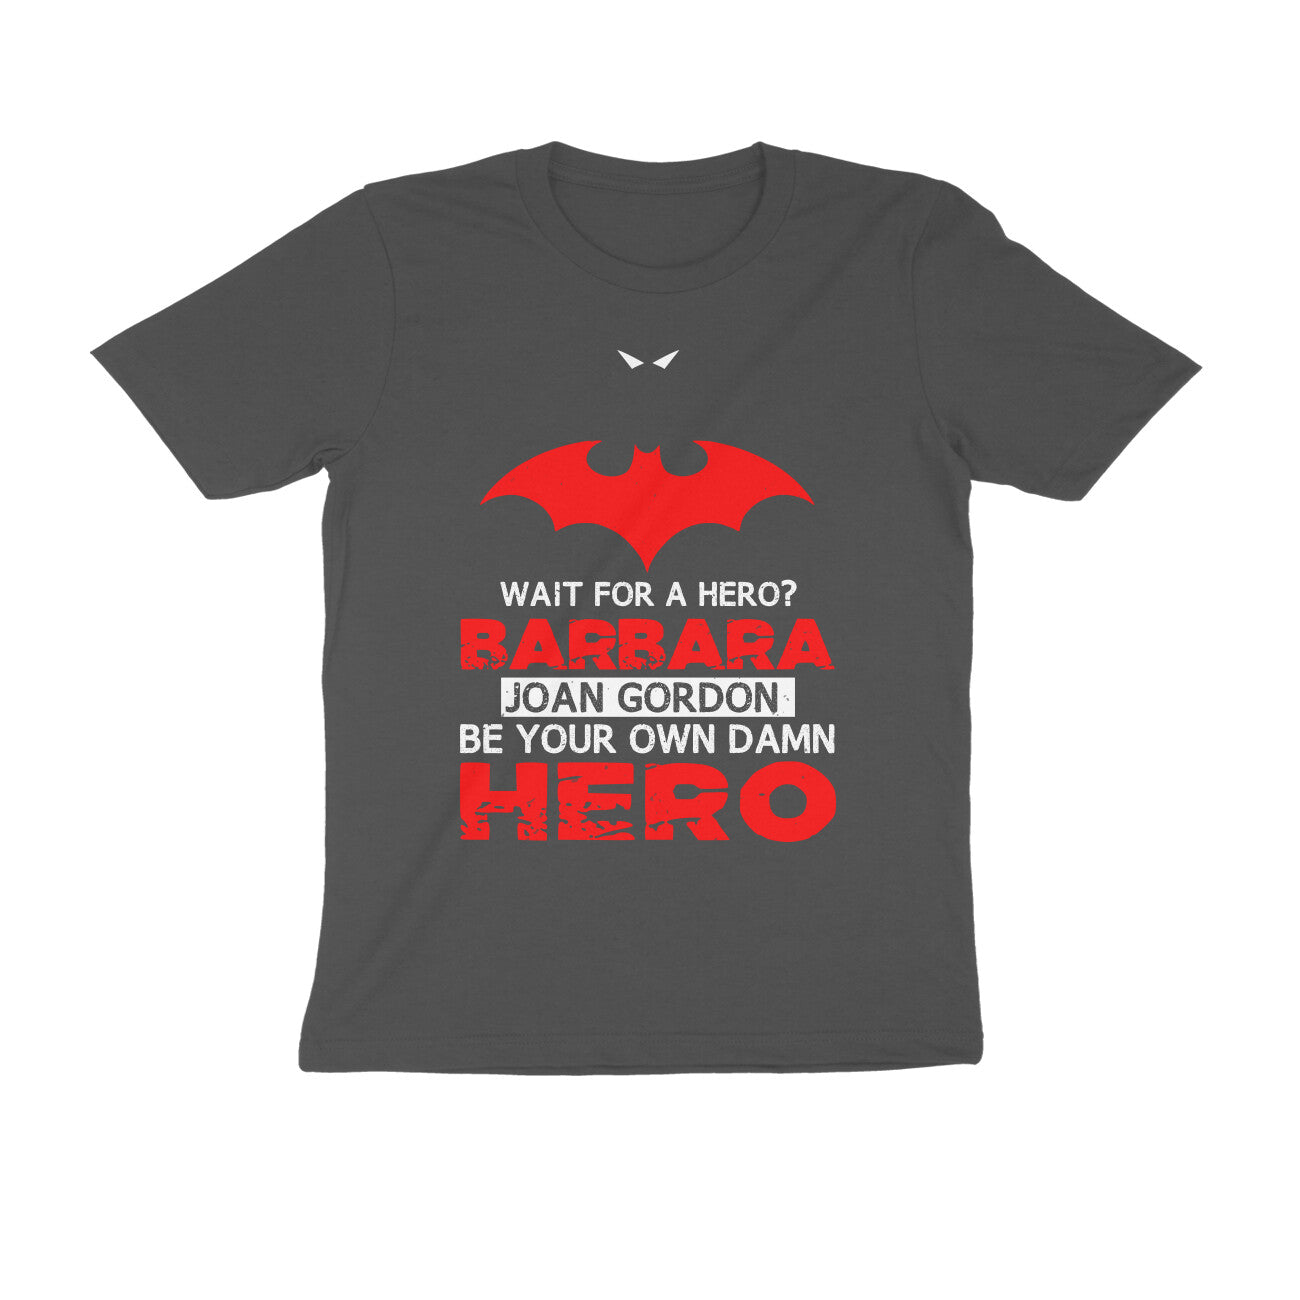 TNH - Men's Round Neck Tshirt - Batman - Hero